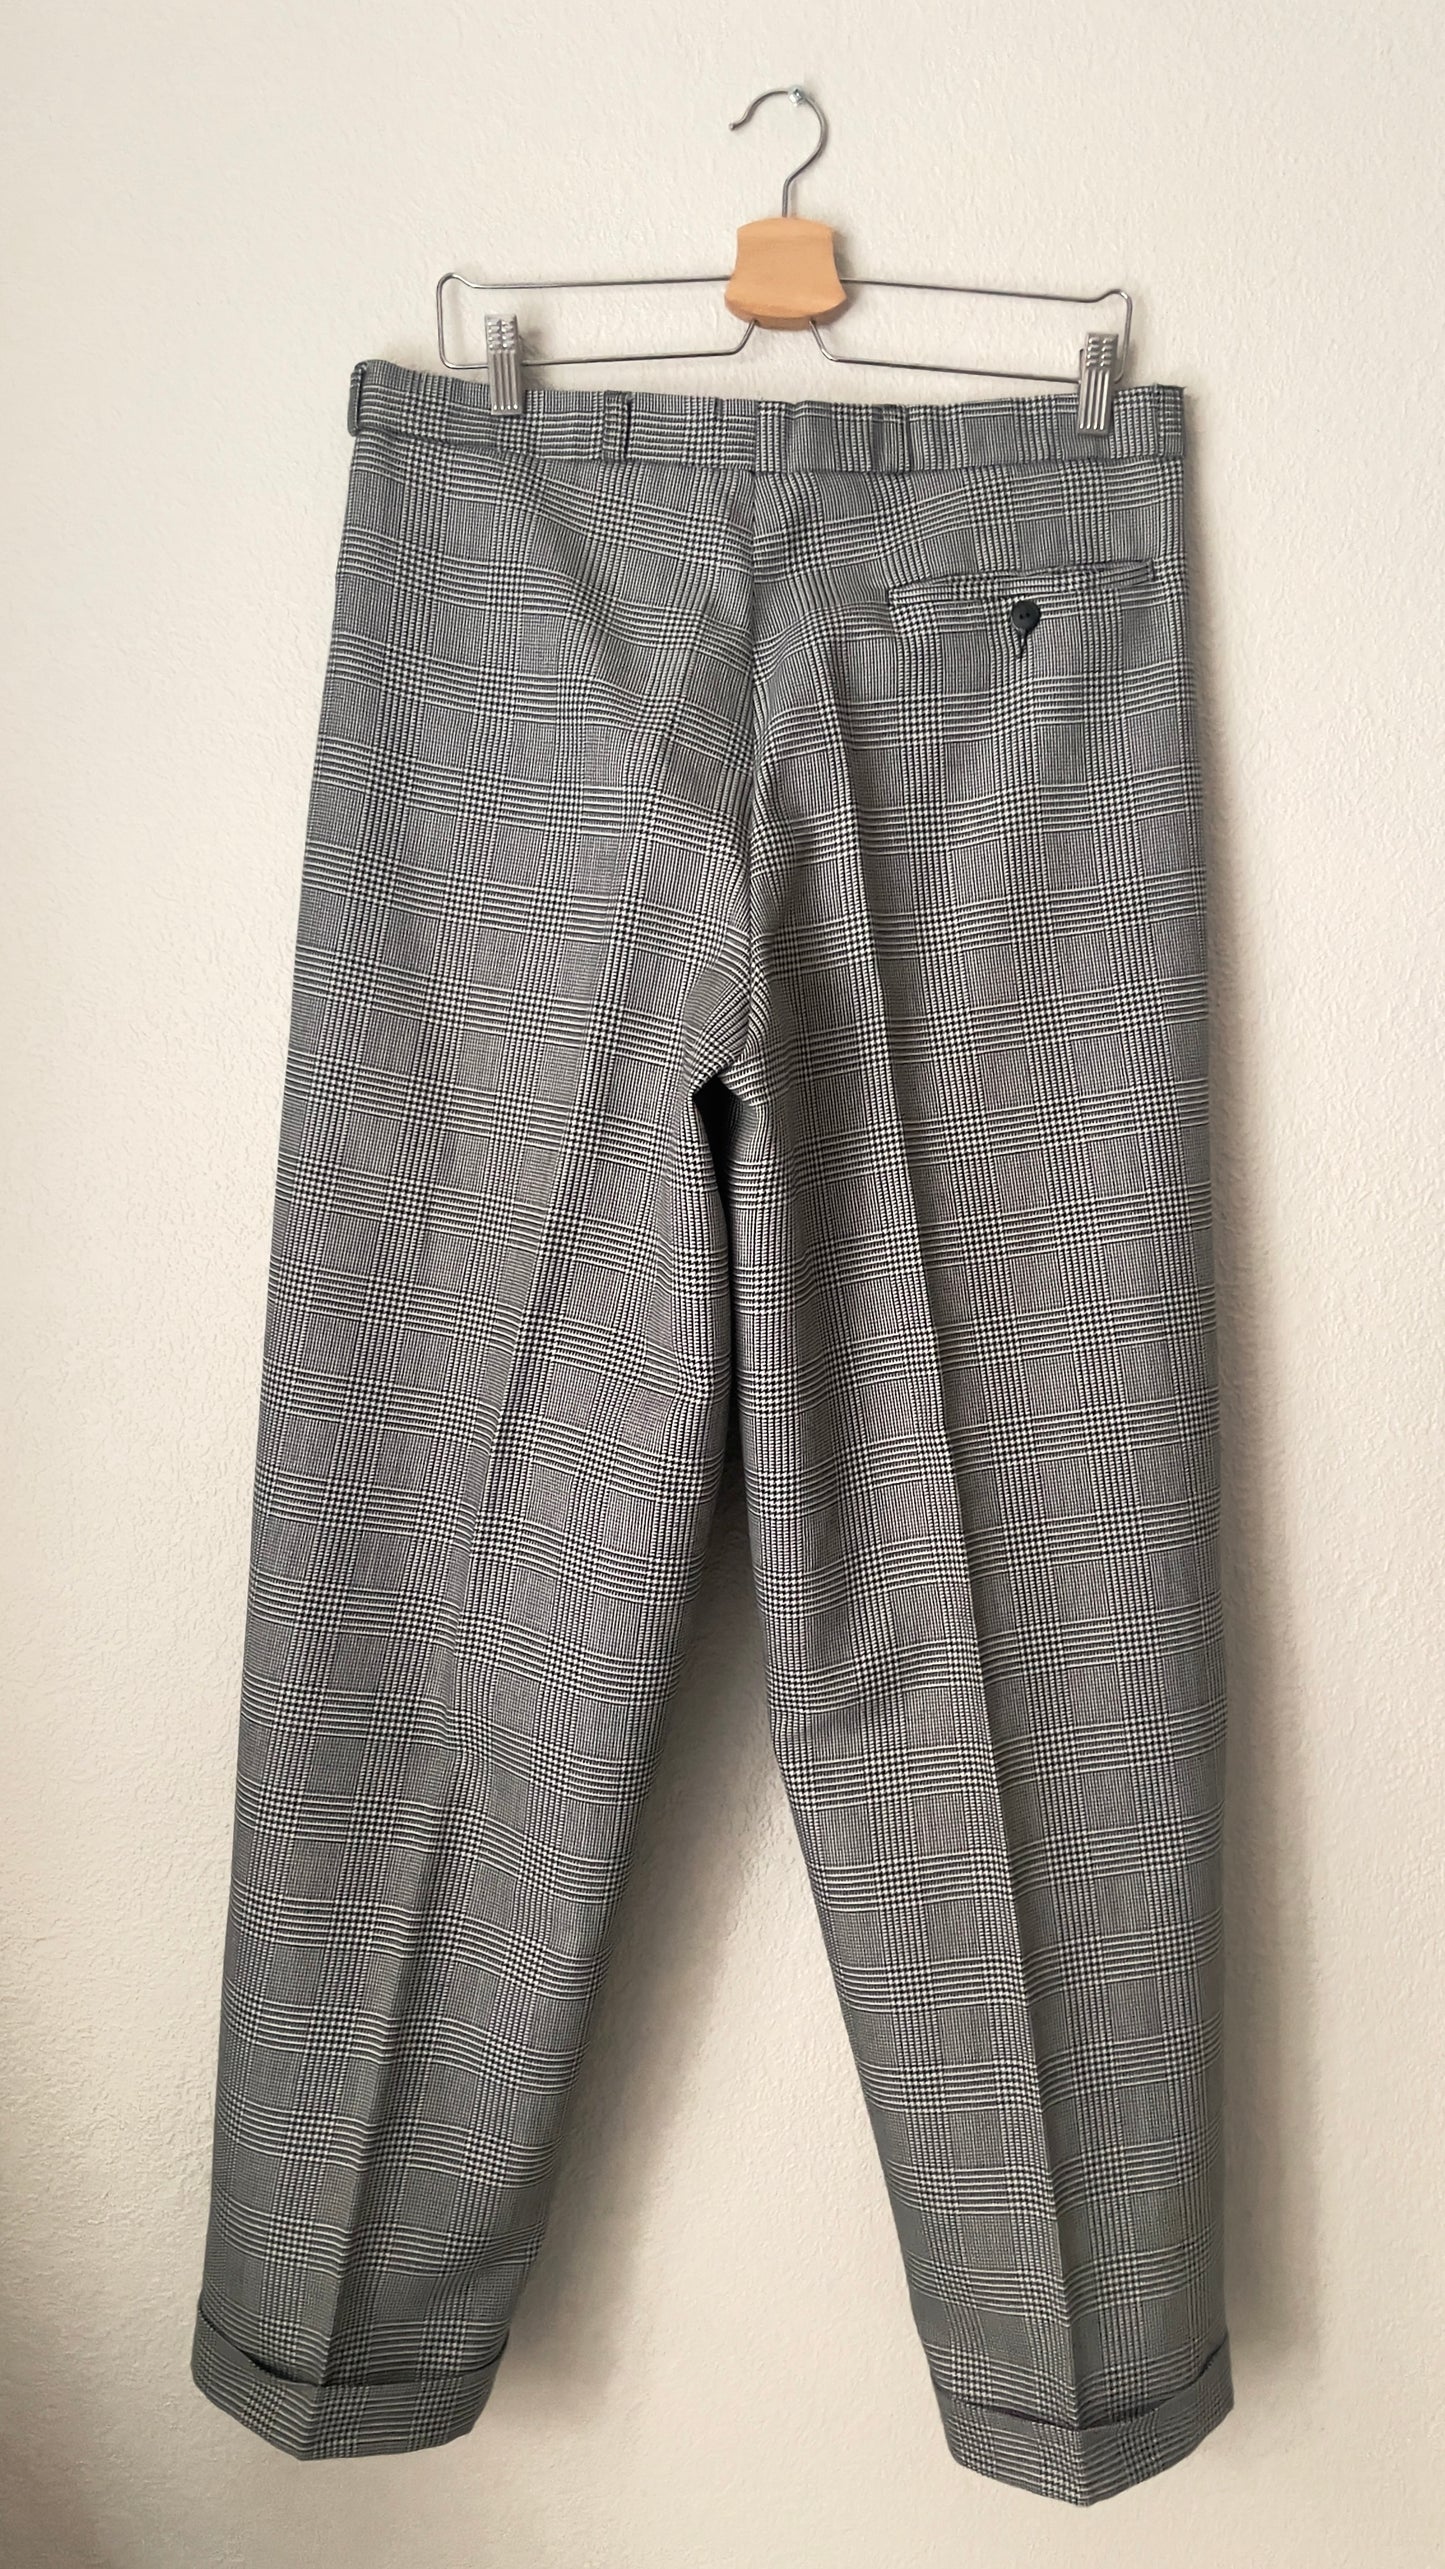 Vintage Houndstooth Plaid Pants